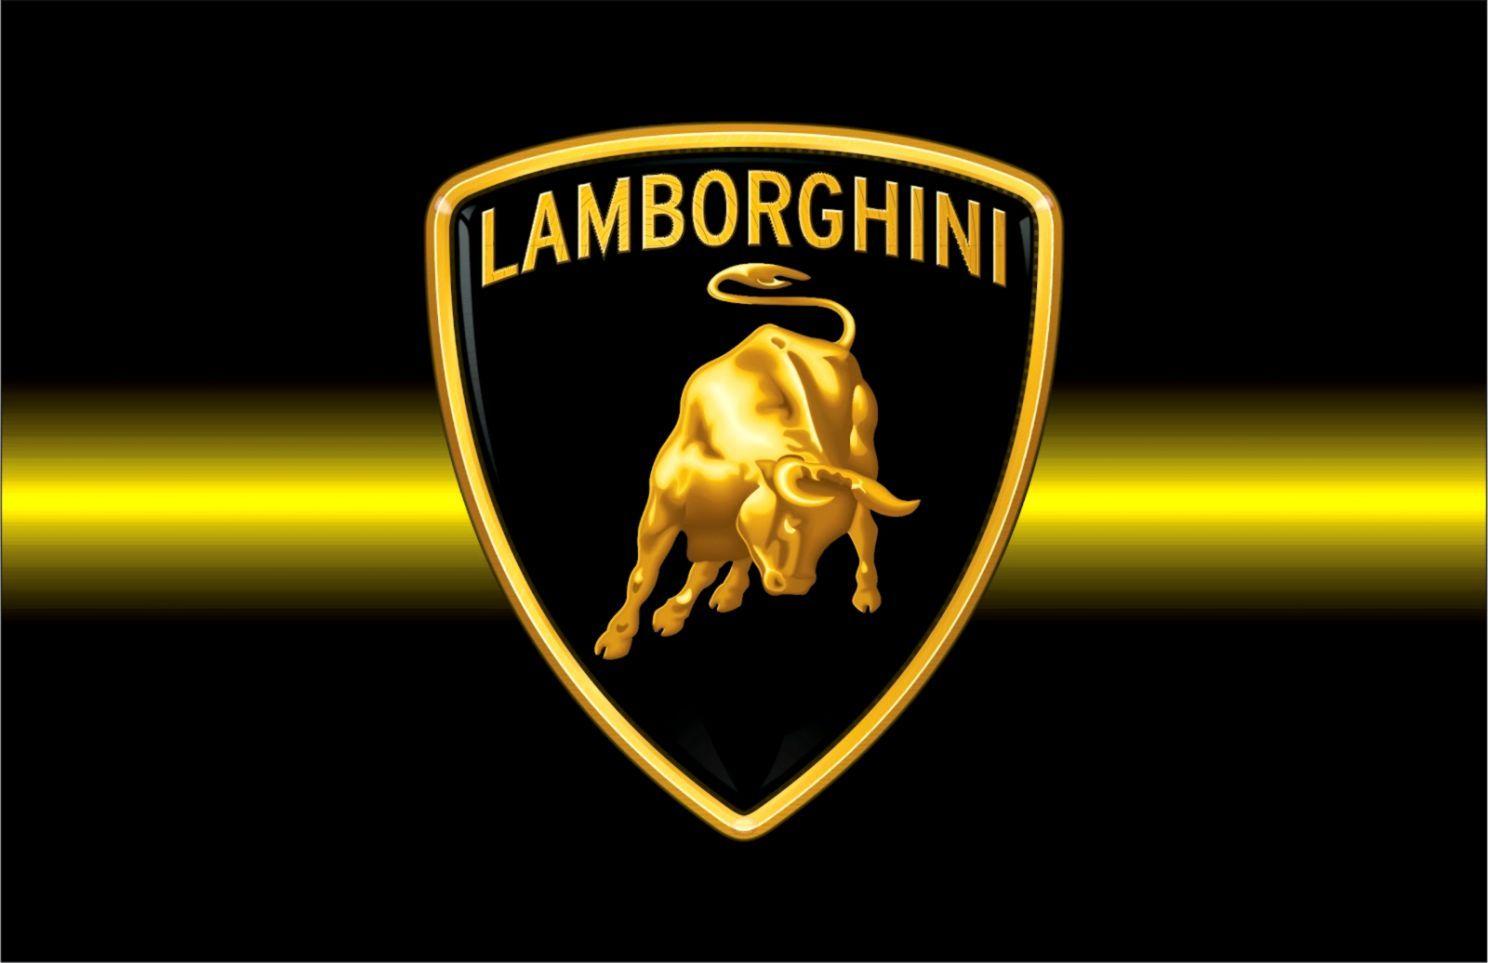 Lamborghini Logo 4k Wallpapers - Top Free Lamborghini Logo 4k